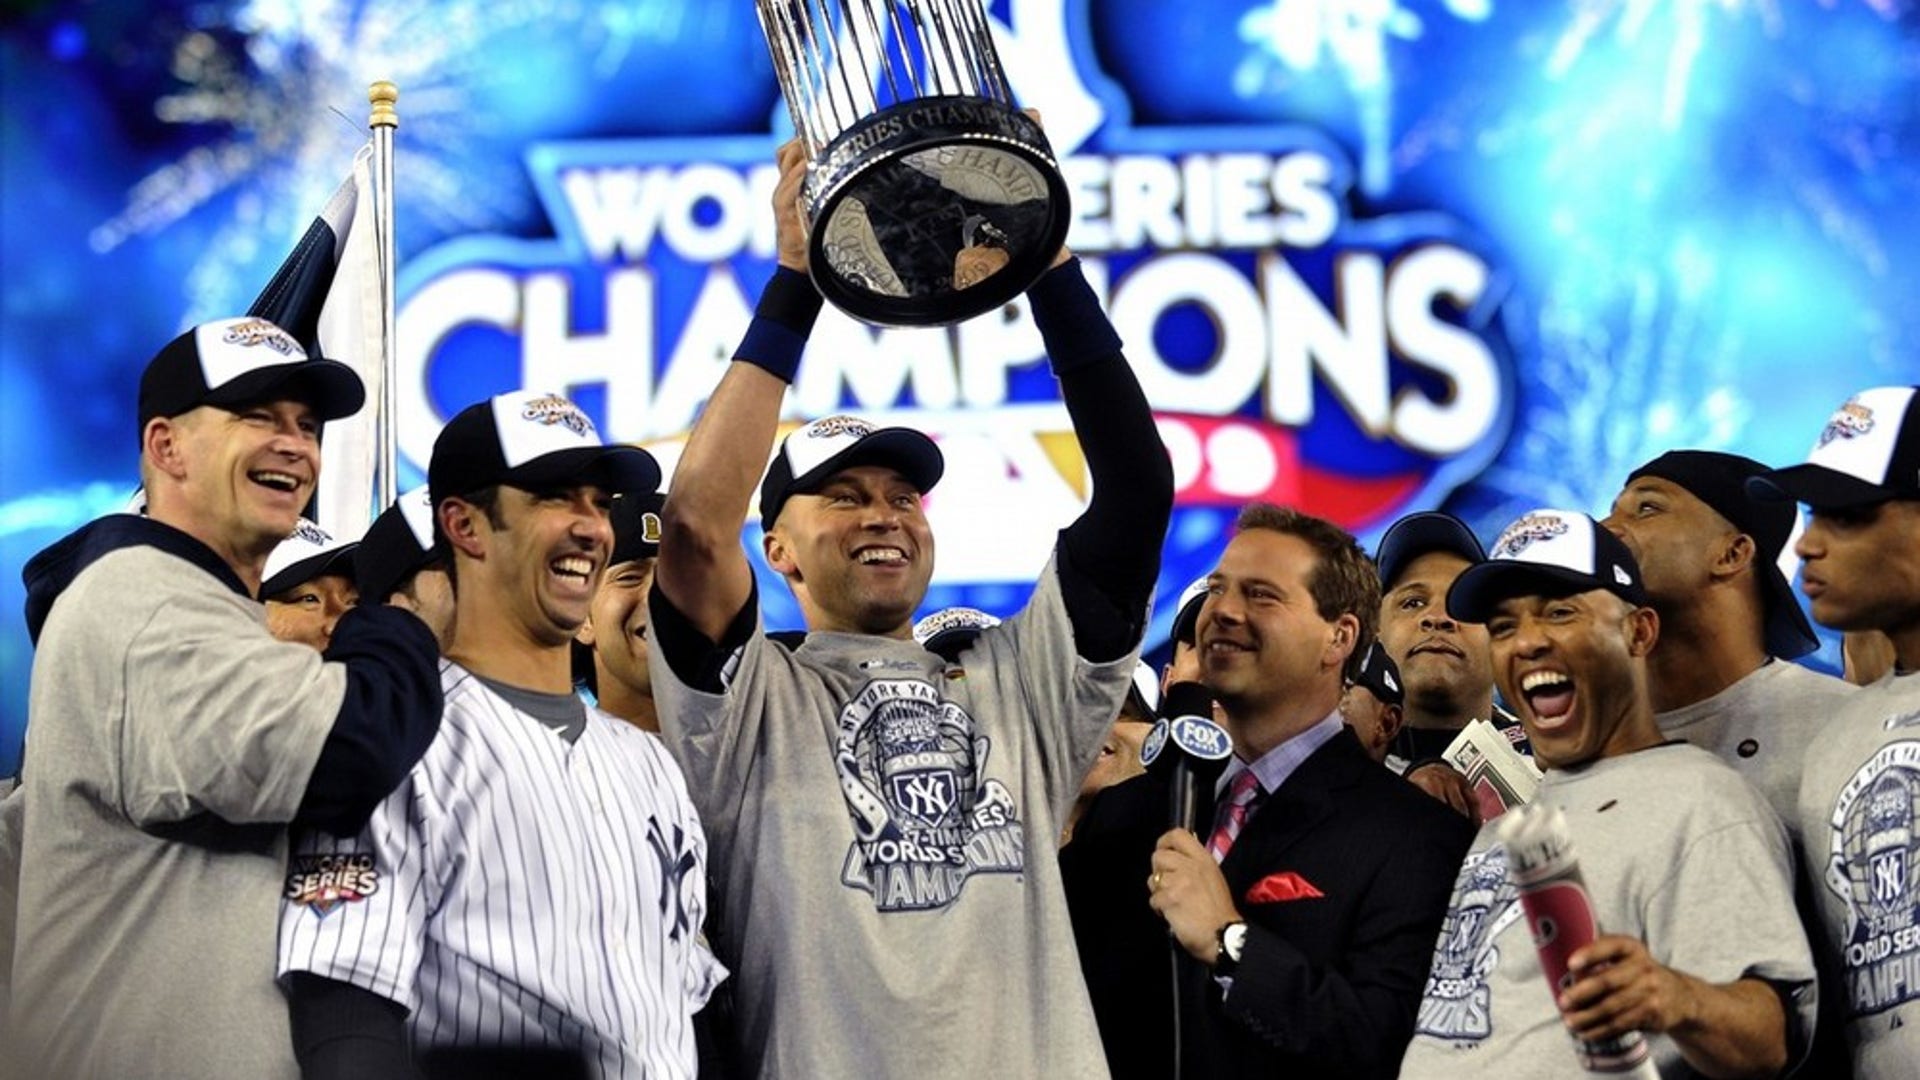 Yankees win championship